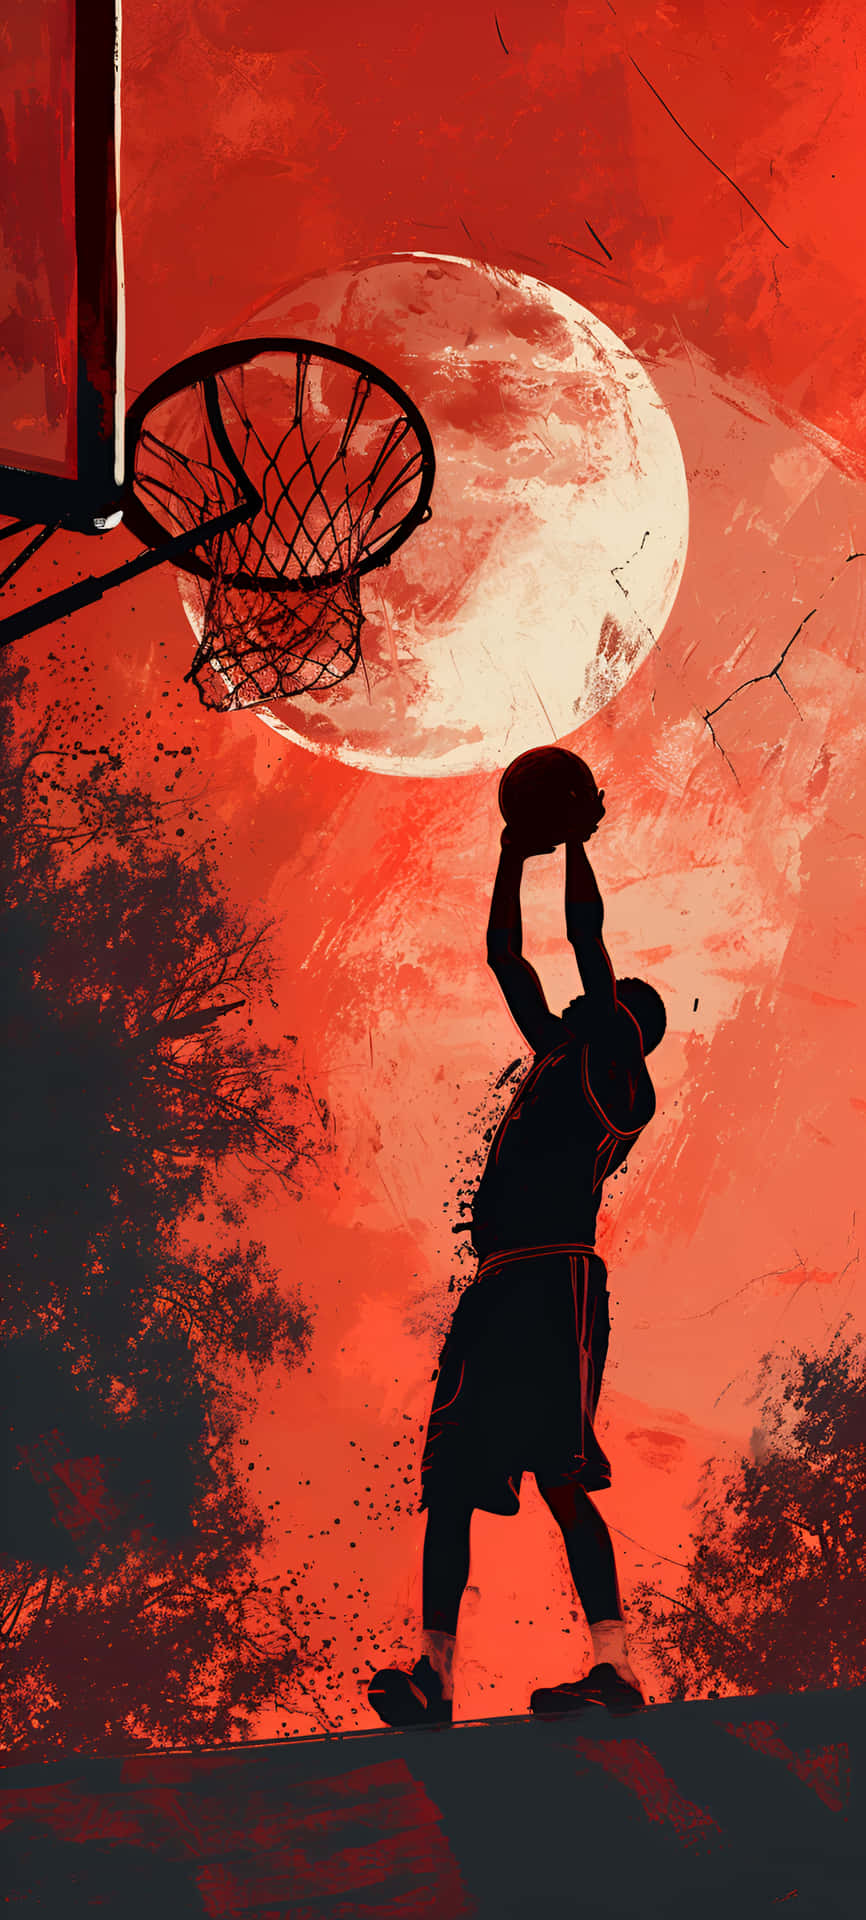 Moonlit Basketball Shot Artwork Wallpaper